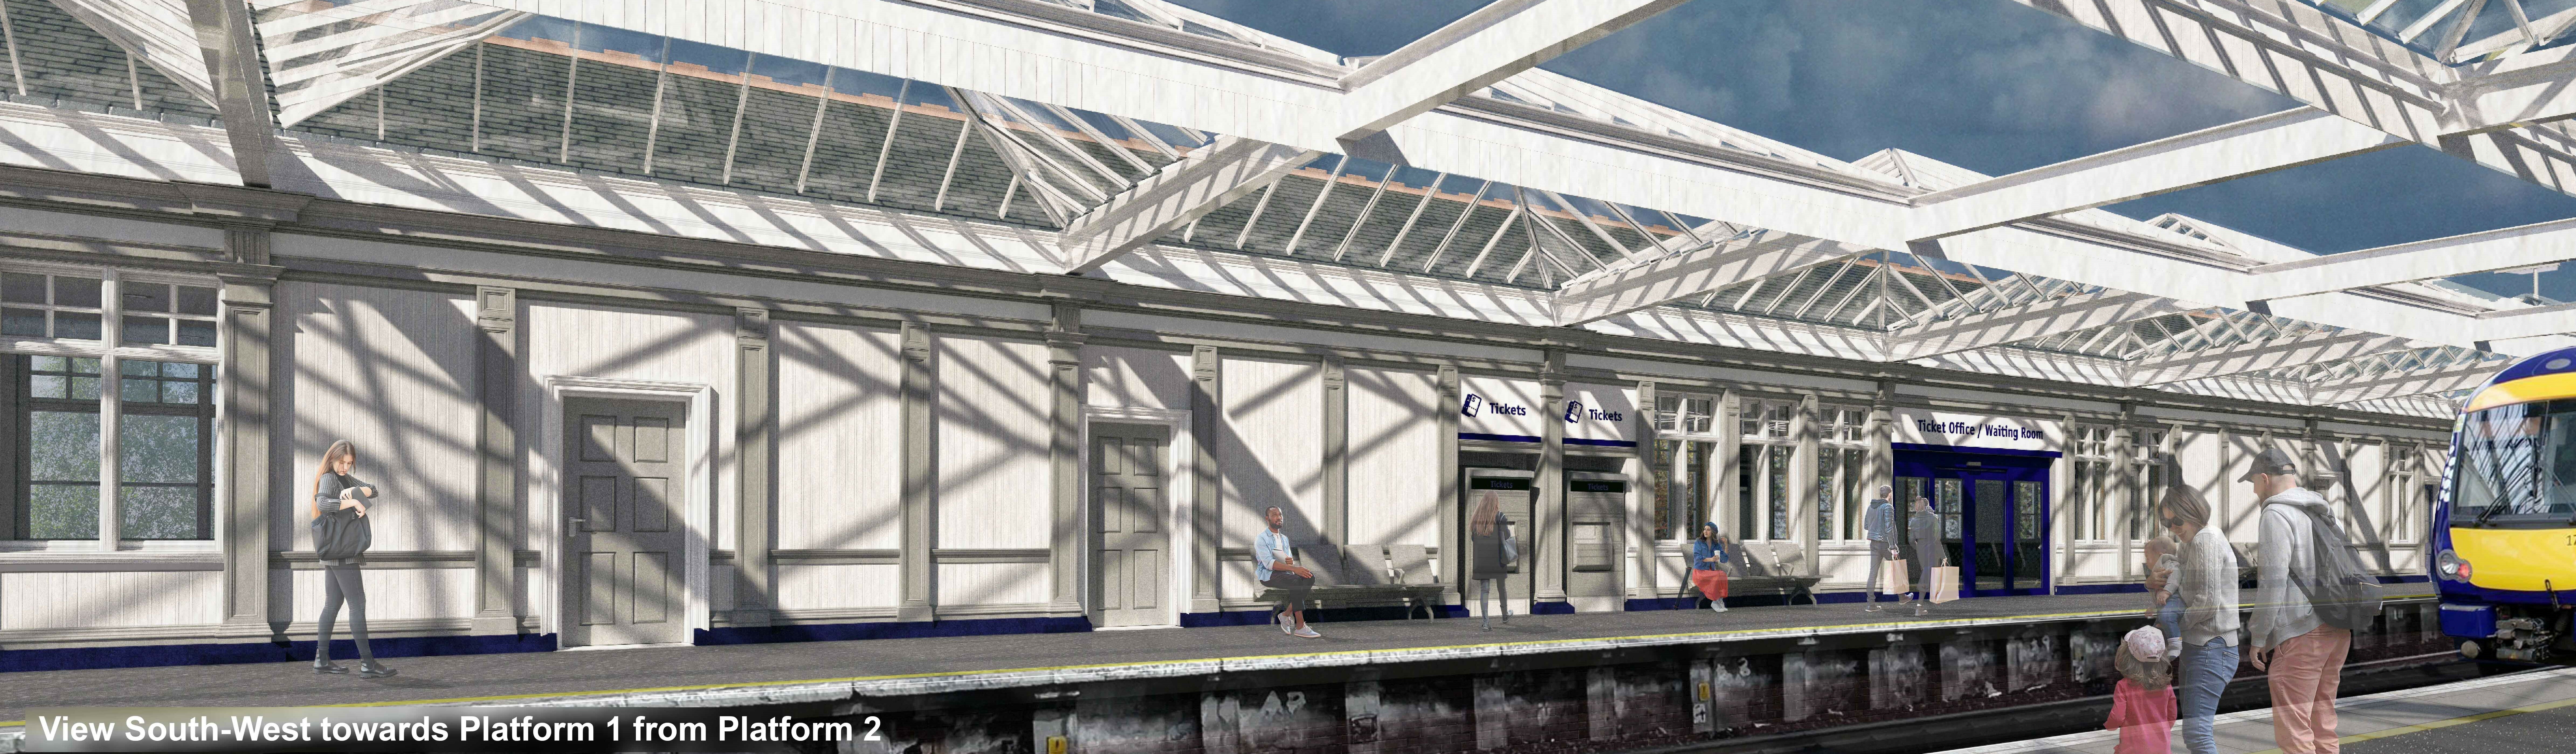 Troon station platform 1 view